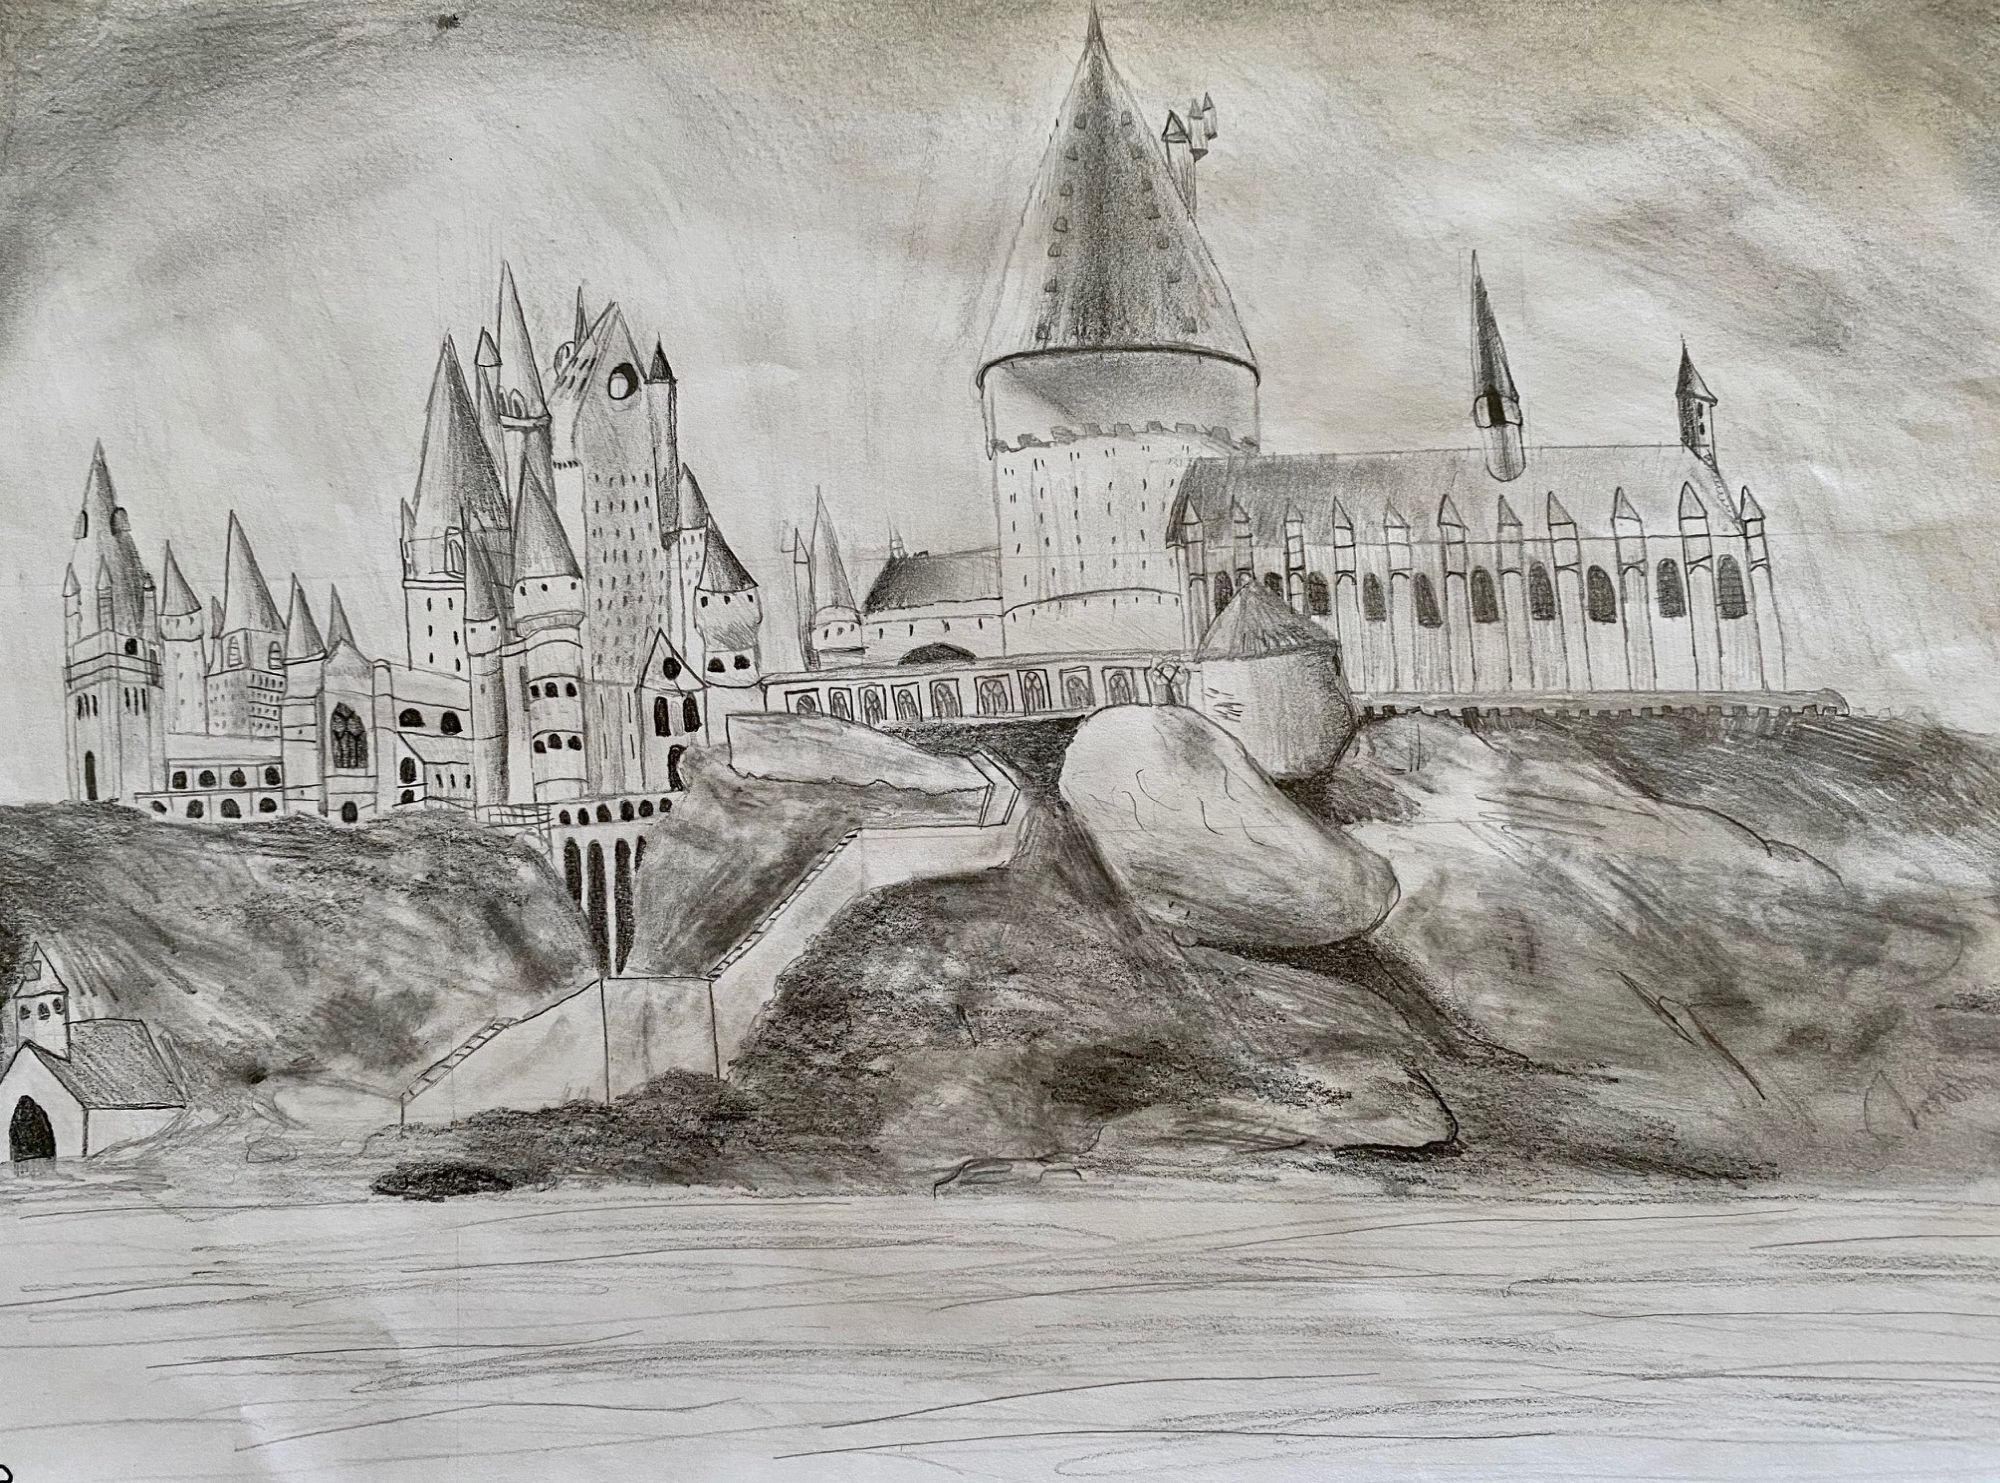 Student artwork - Magical Castle